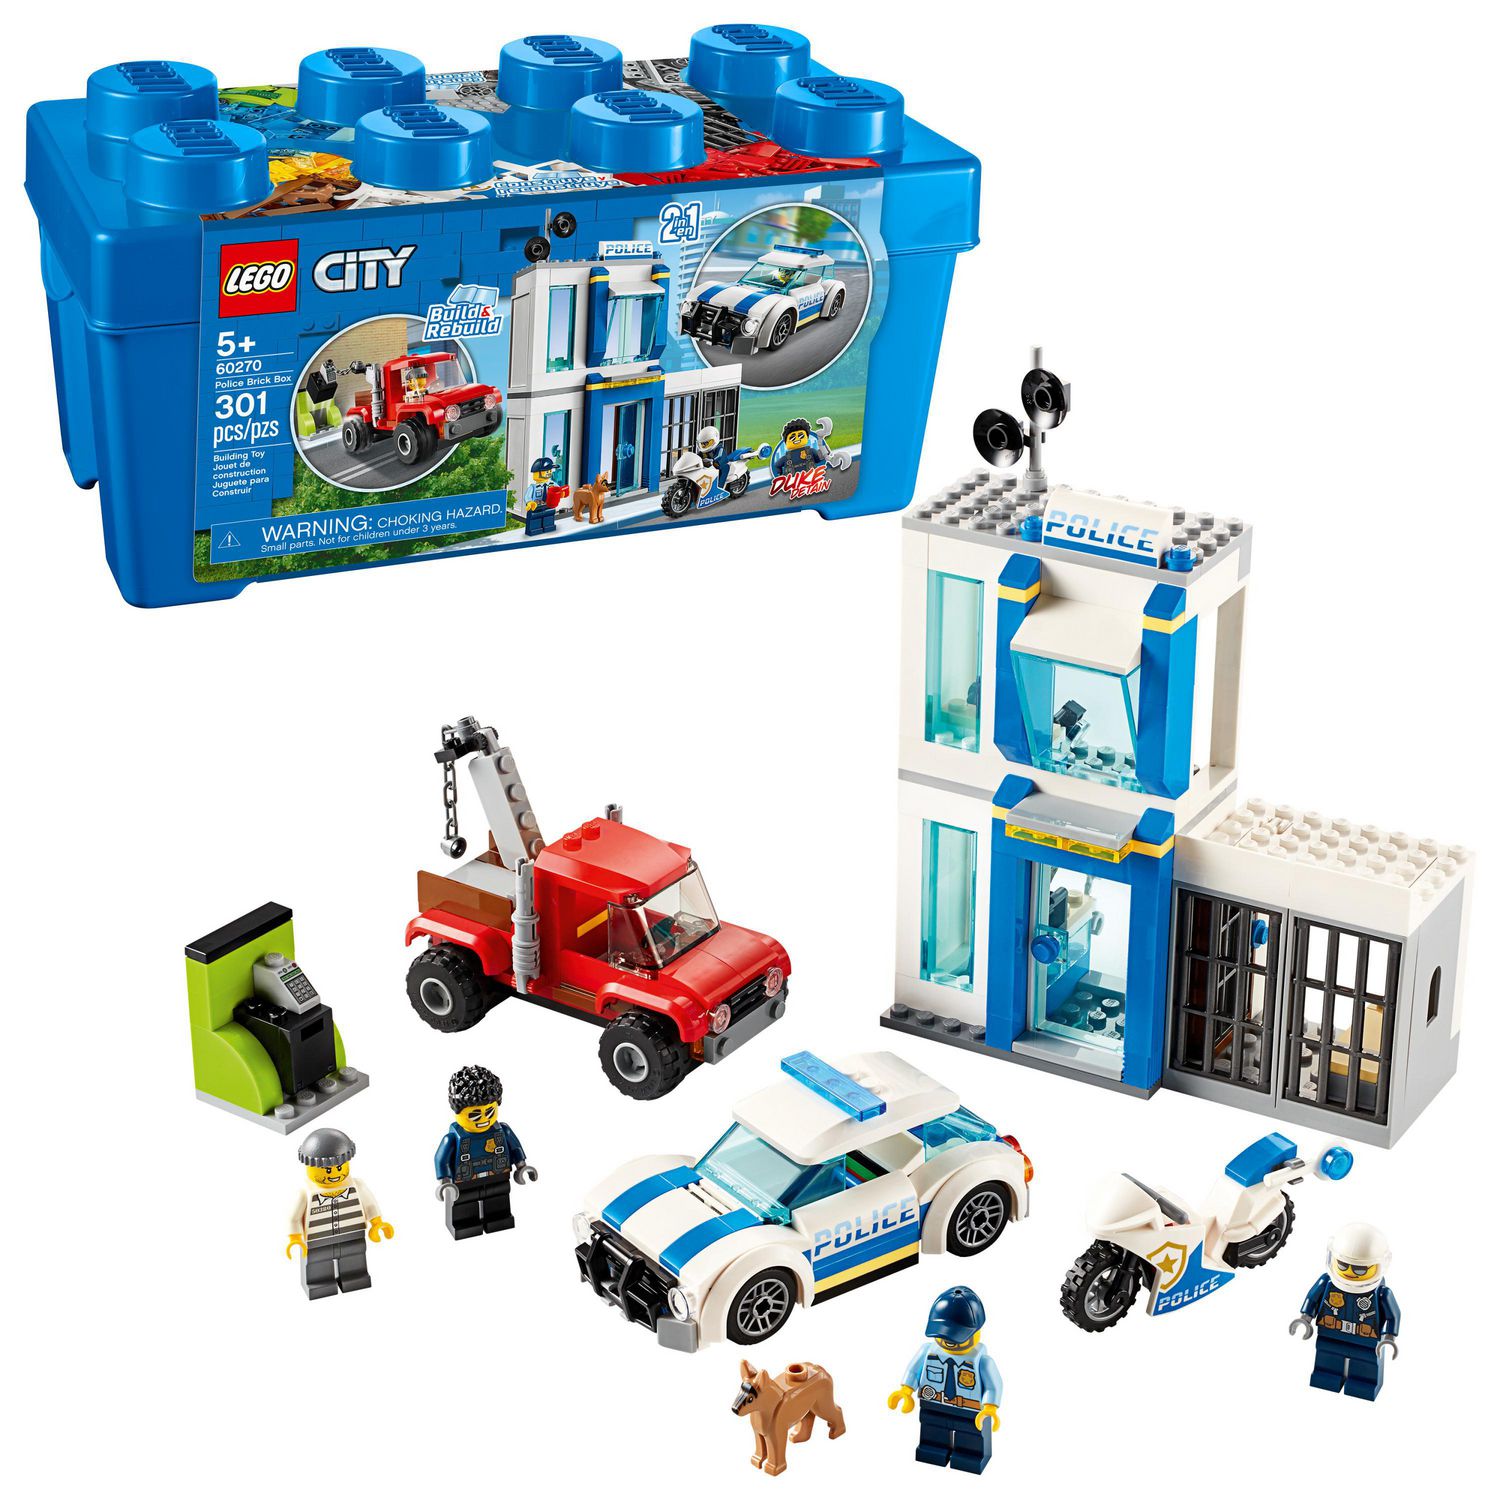 LEGO City Police Brick Box 60270 Toy Building Kit (301 Pieces) | Walmart Canada